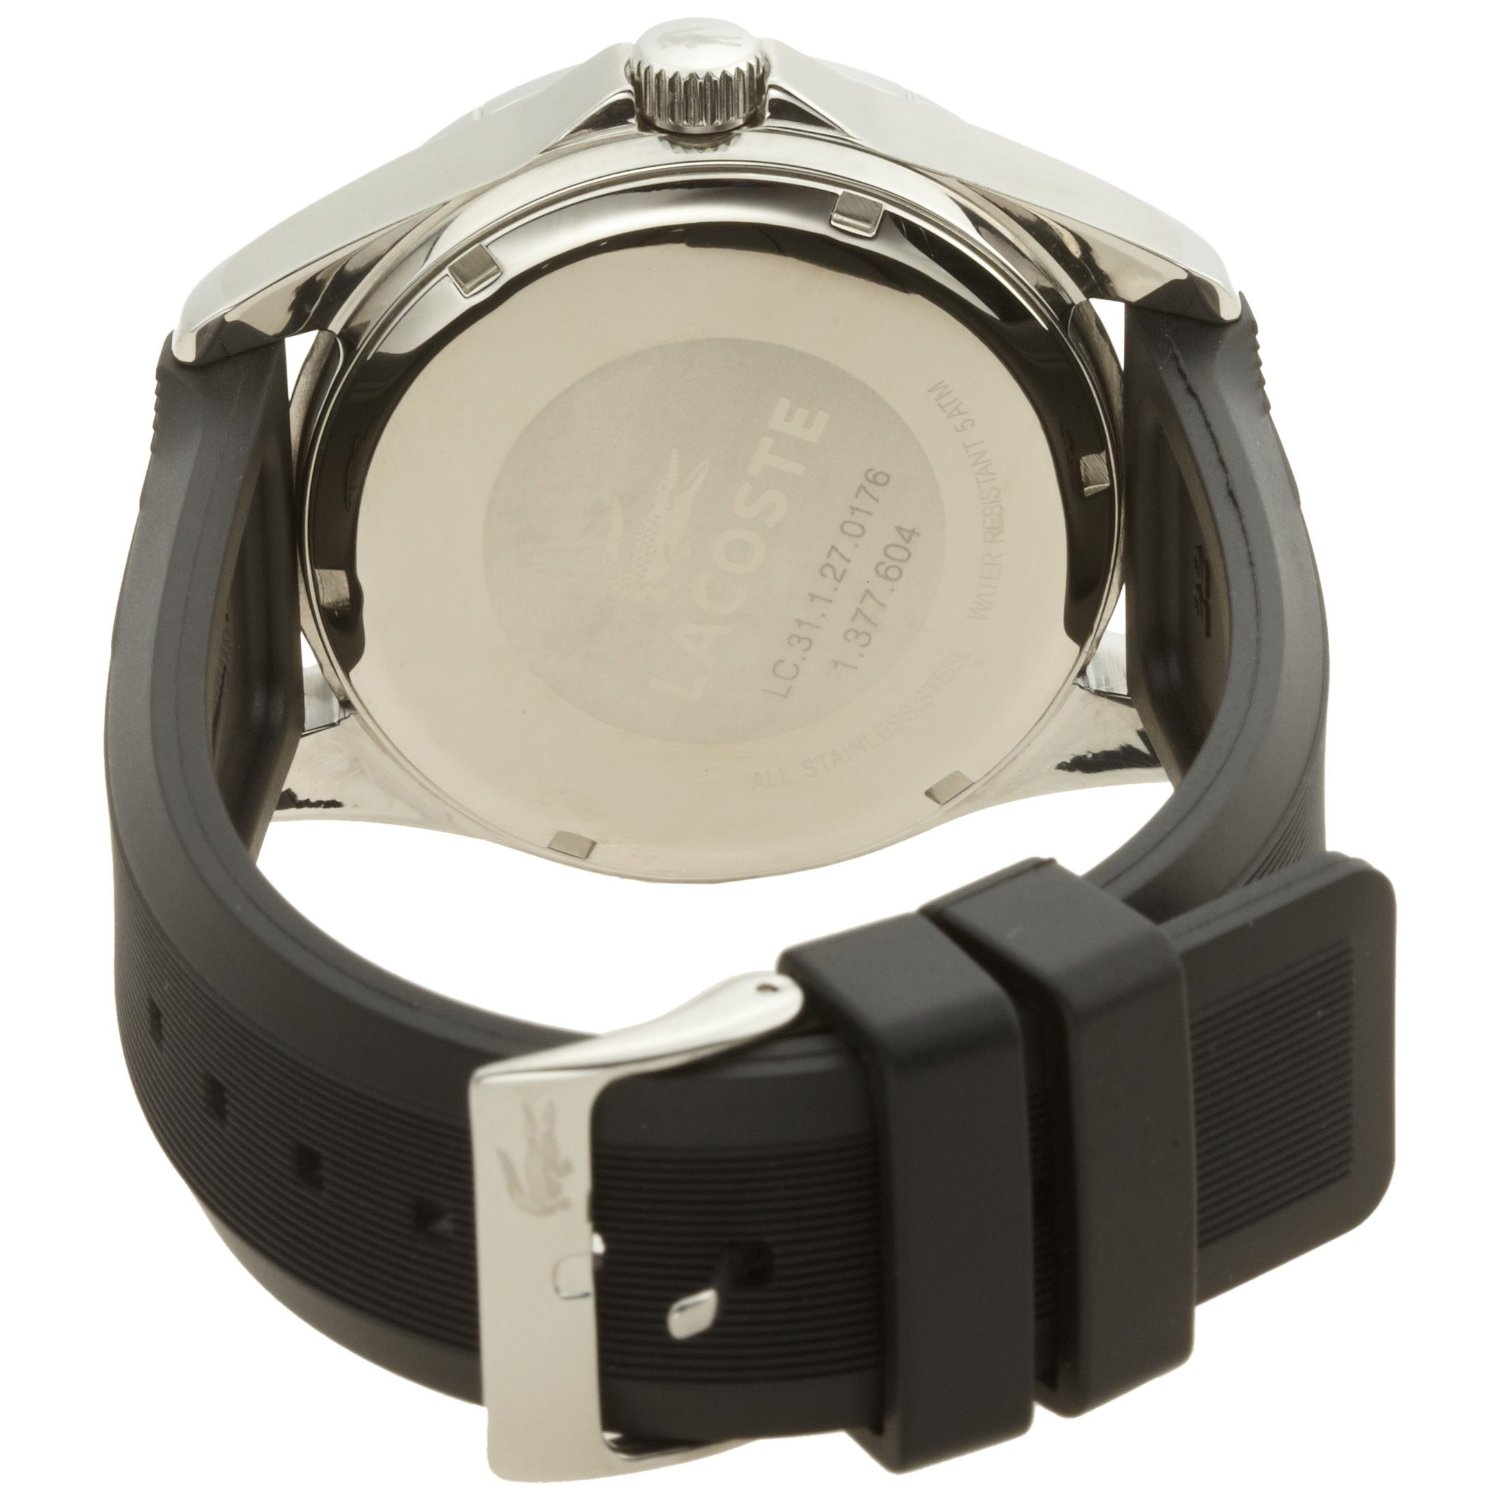 2010481 Lacoste Men's Lacoste Sport Navigator Automatic Watch